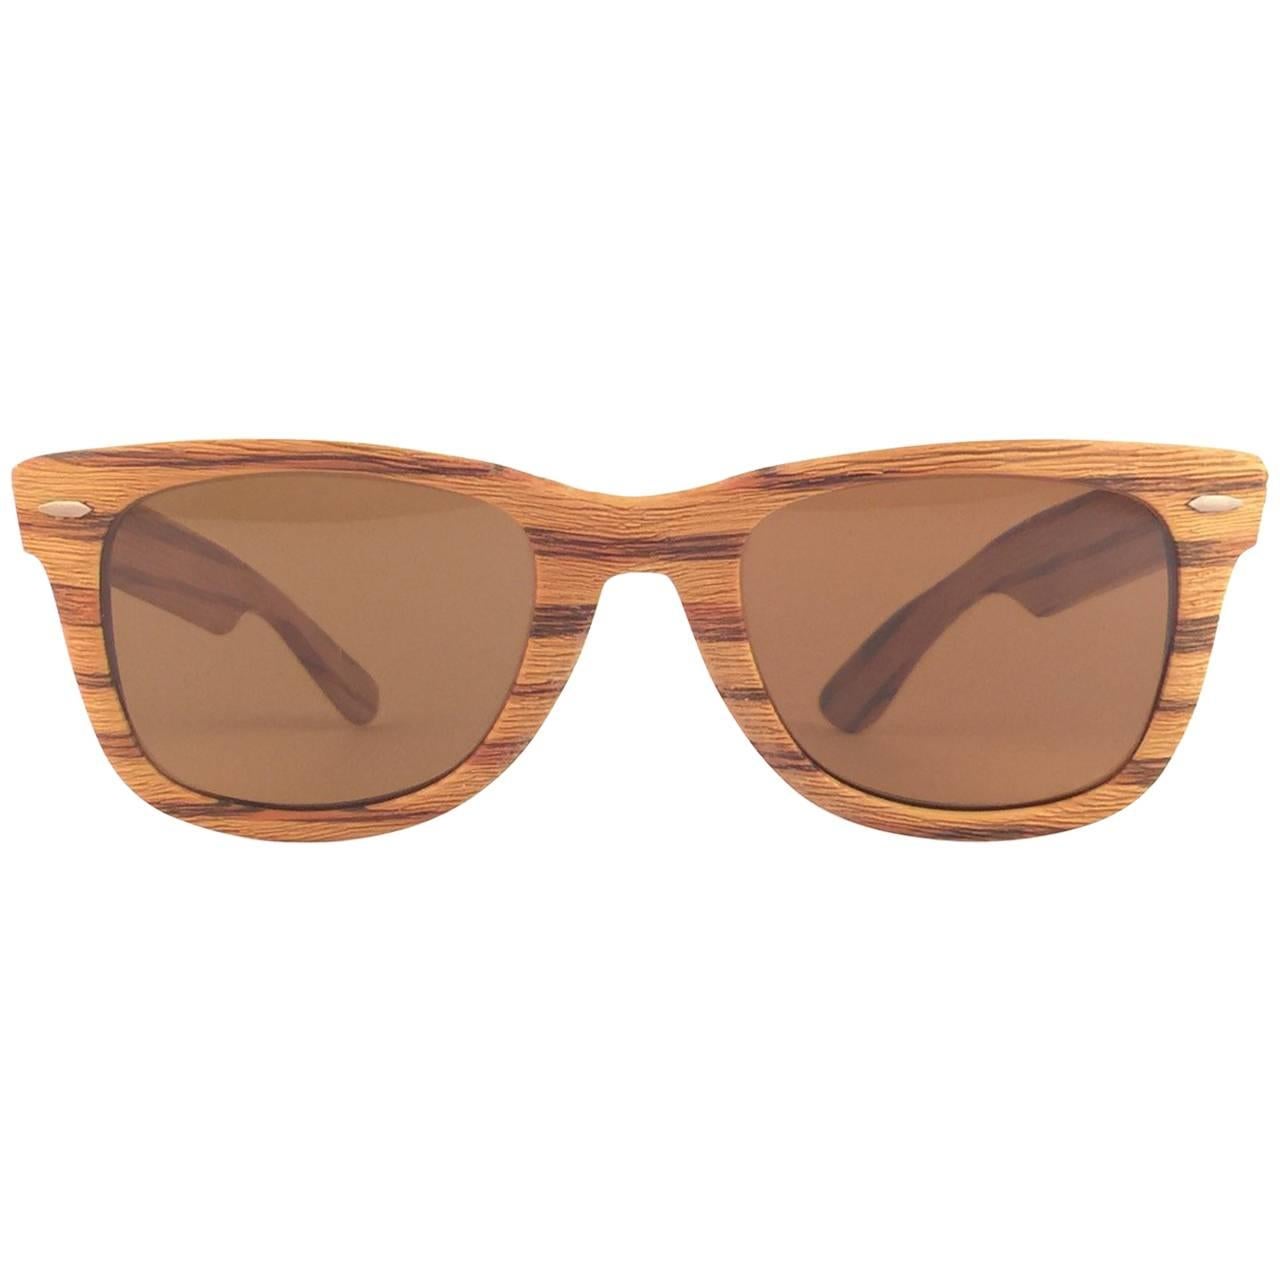 Nouveau Ray Ban The Wayfarer Woodies Teak Edition Collectors USA 80's Sunglasses